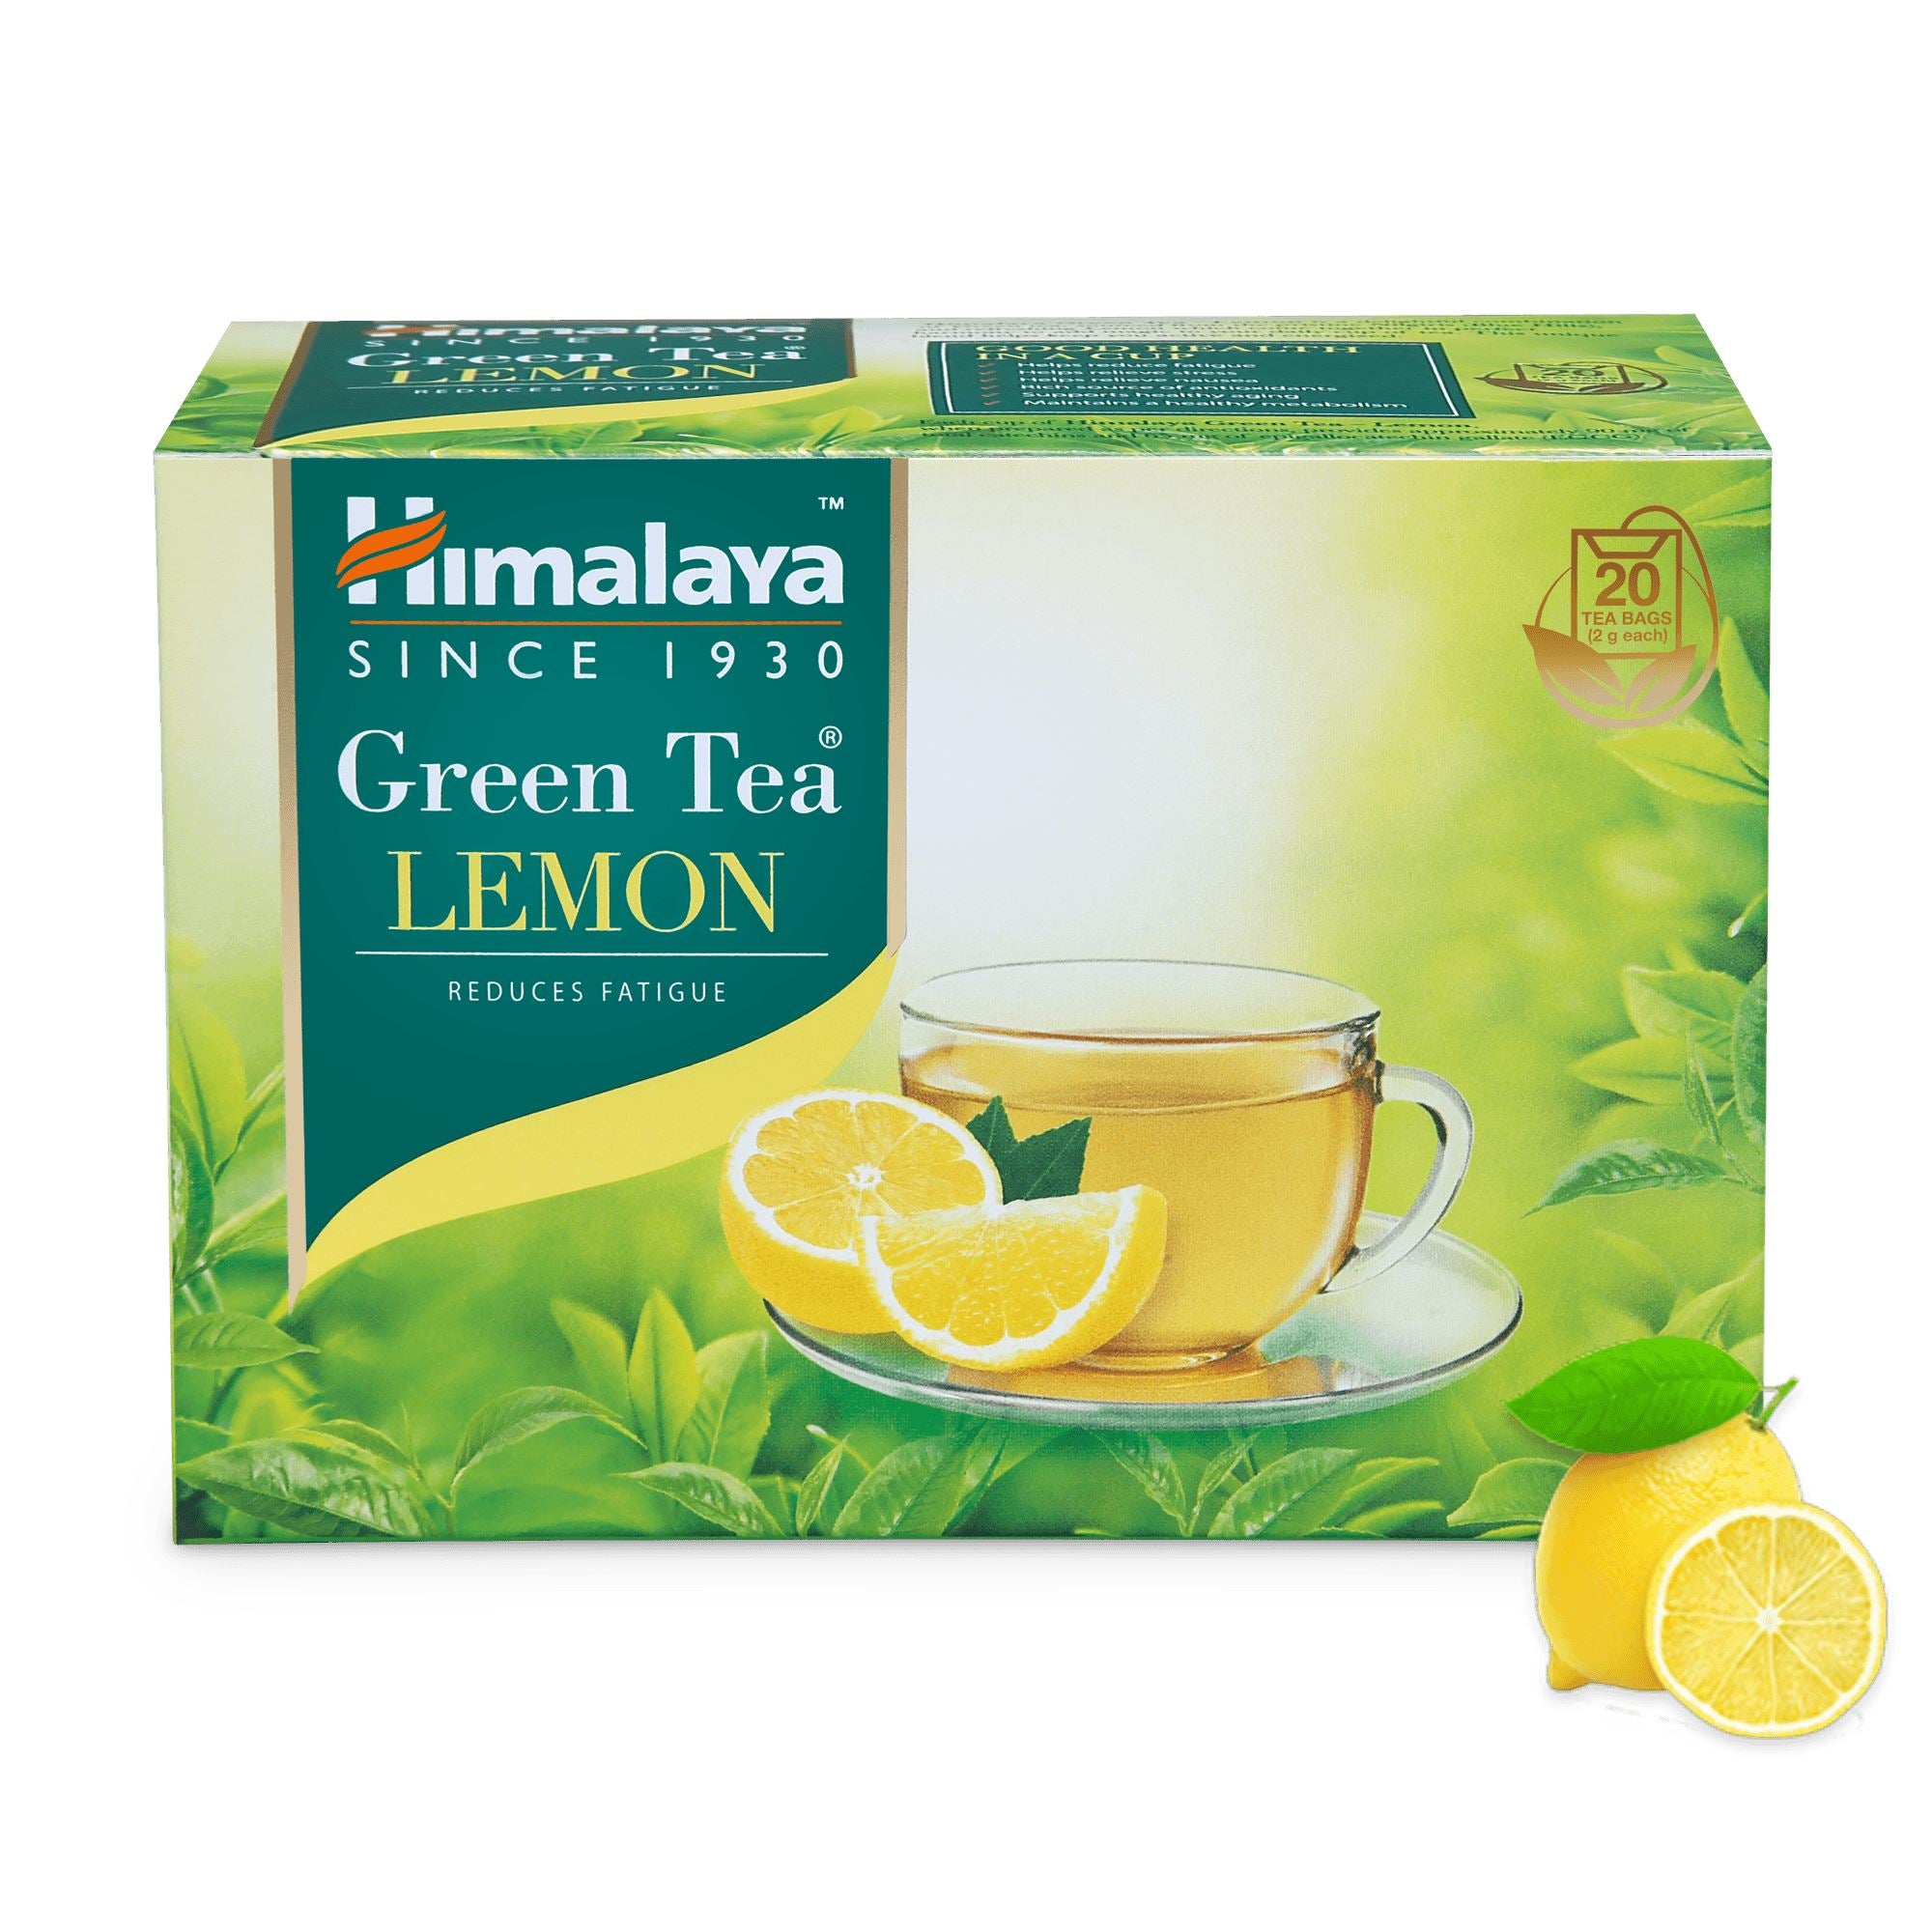 Himalaya Green Tea LEMON - Helps you stay active and energized